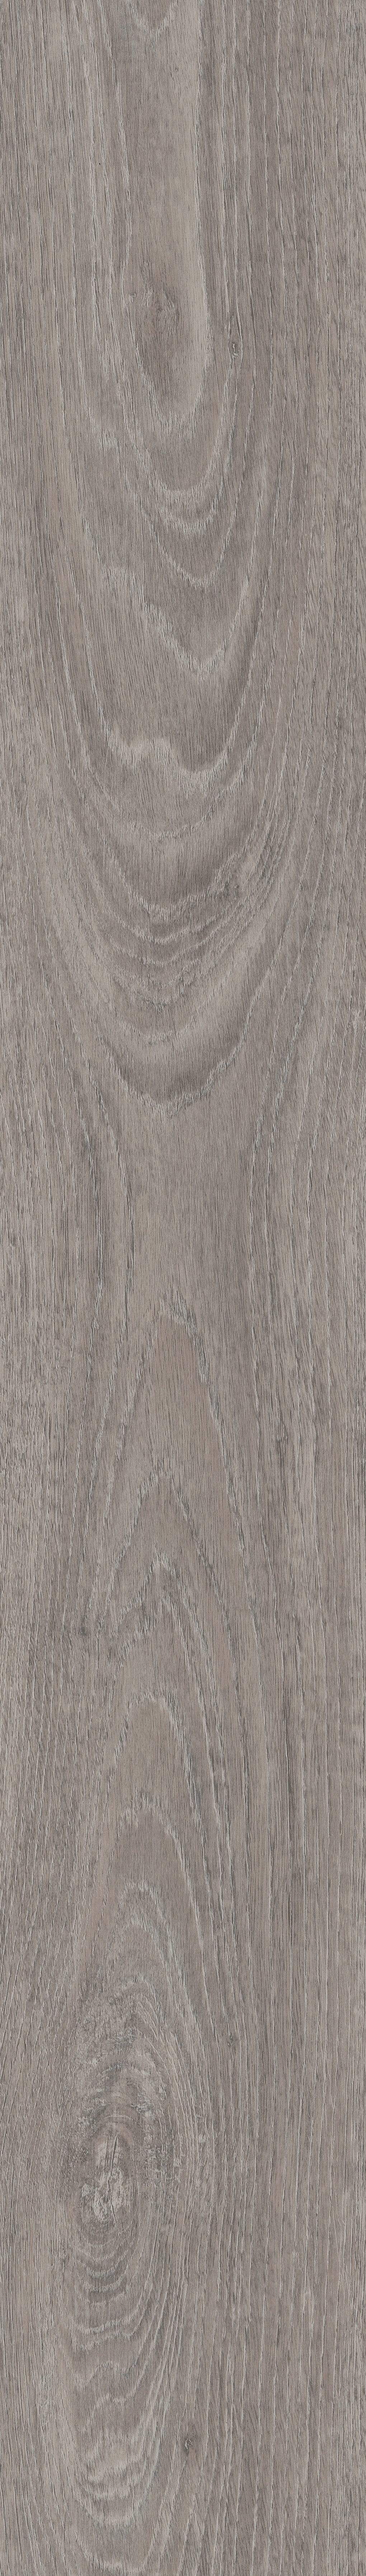 Flooring & Carpet  -  Luvanto Click Wash Grey Oak Flooring 2.2M  -  50155754